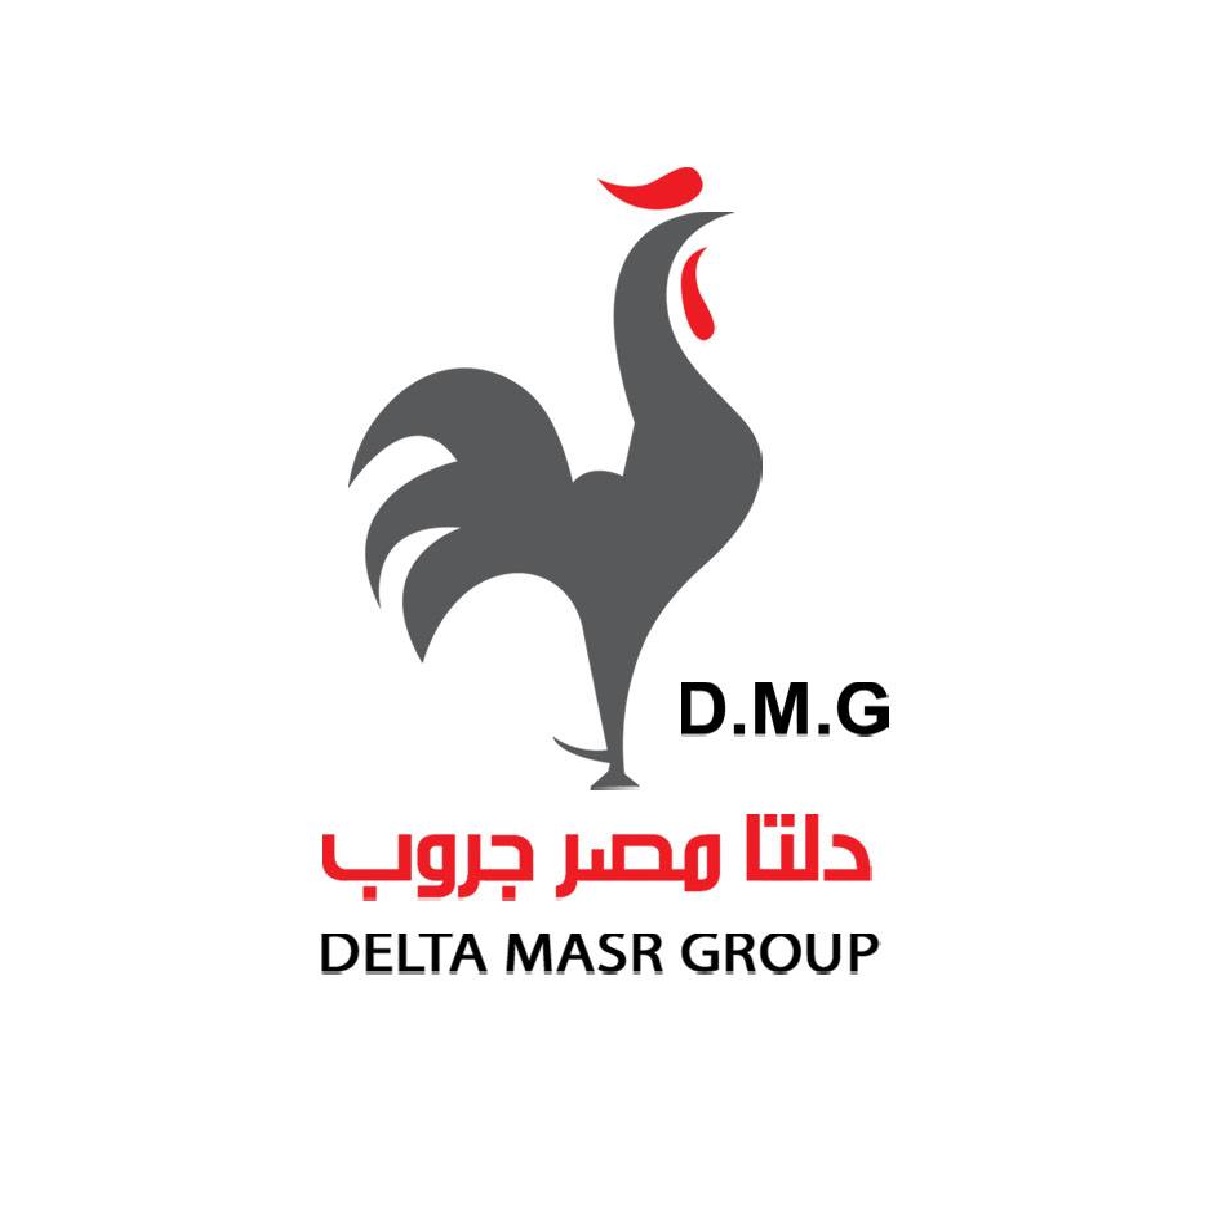 Delta Masr Group